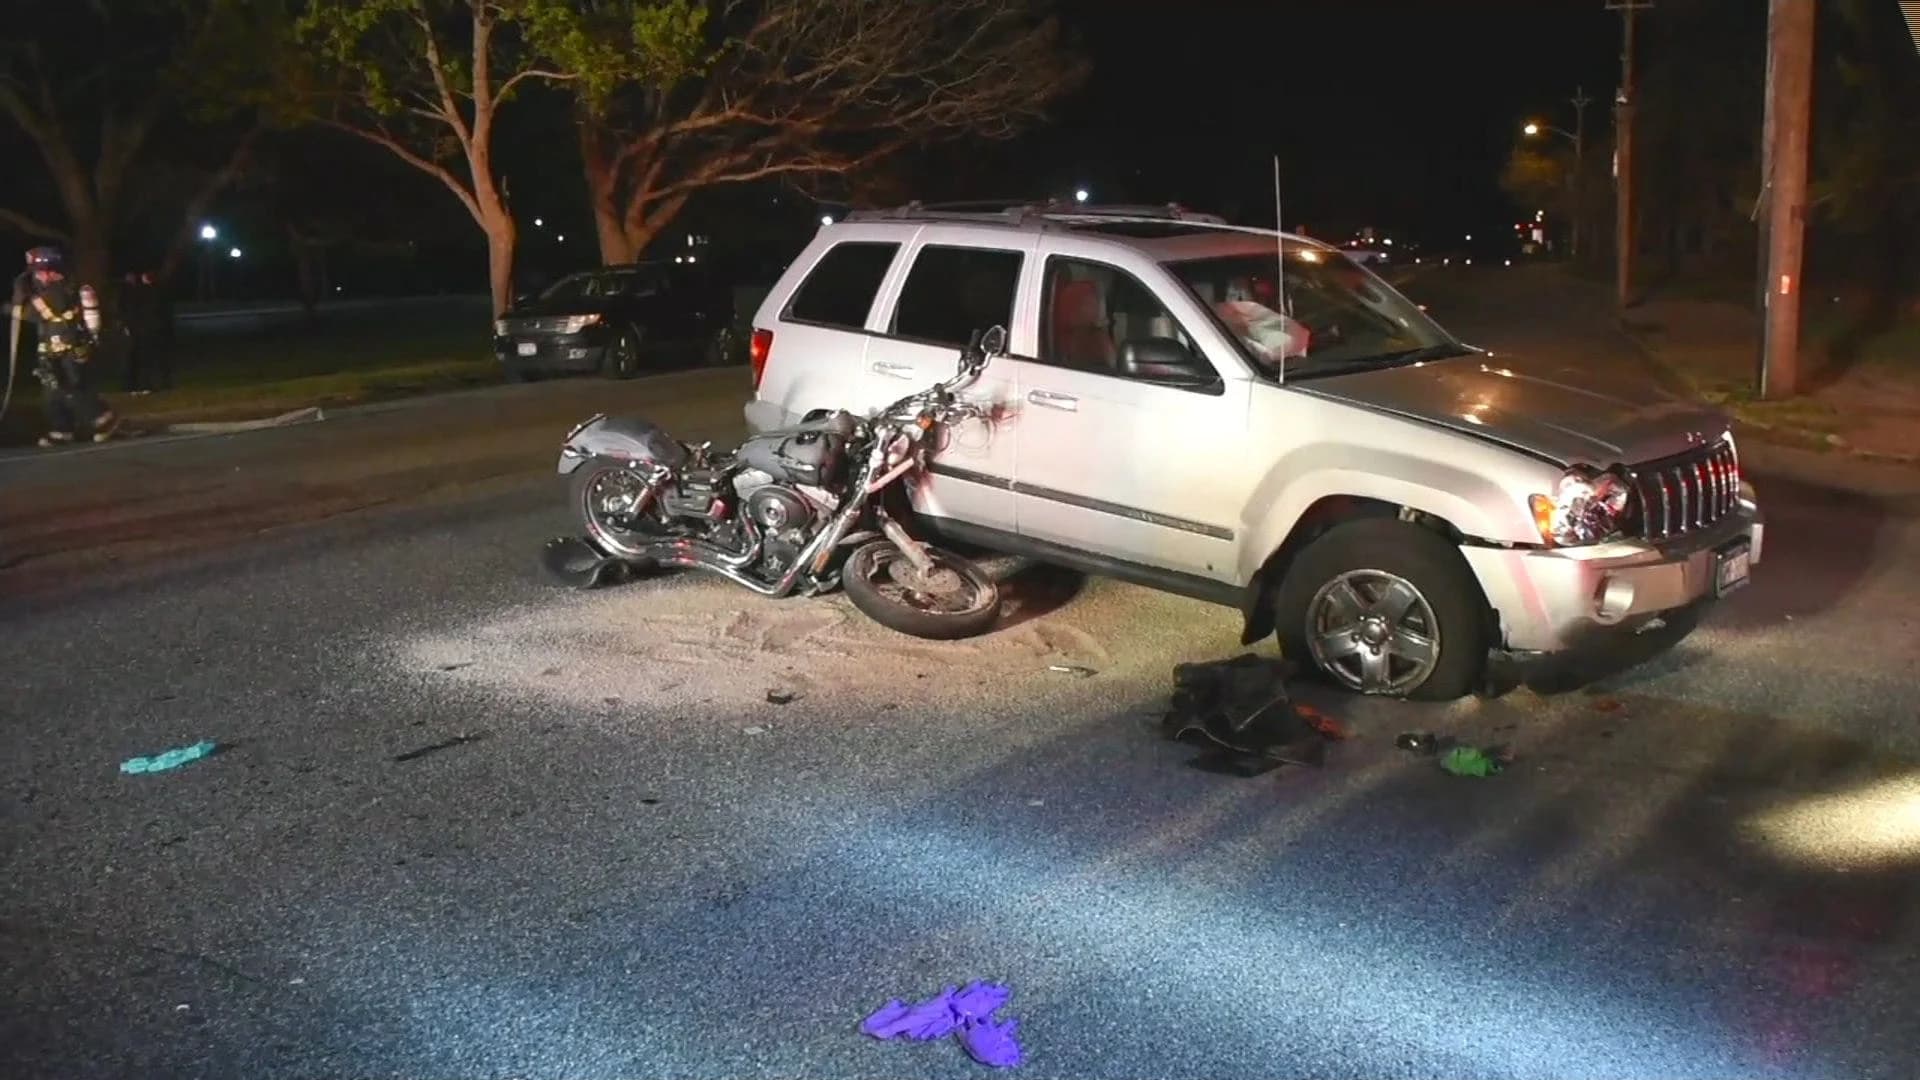 Motorcycle, SUV collide in Selden